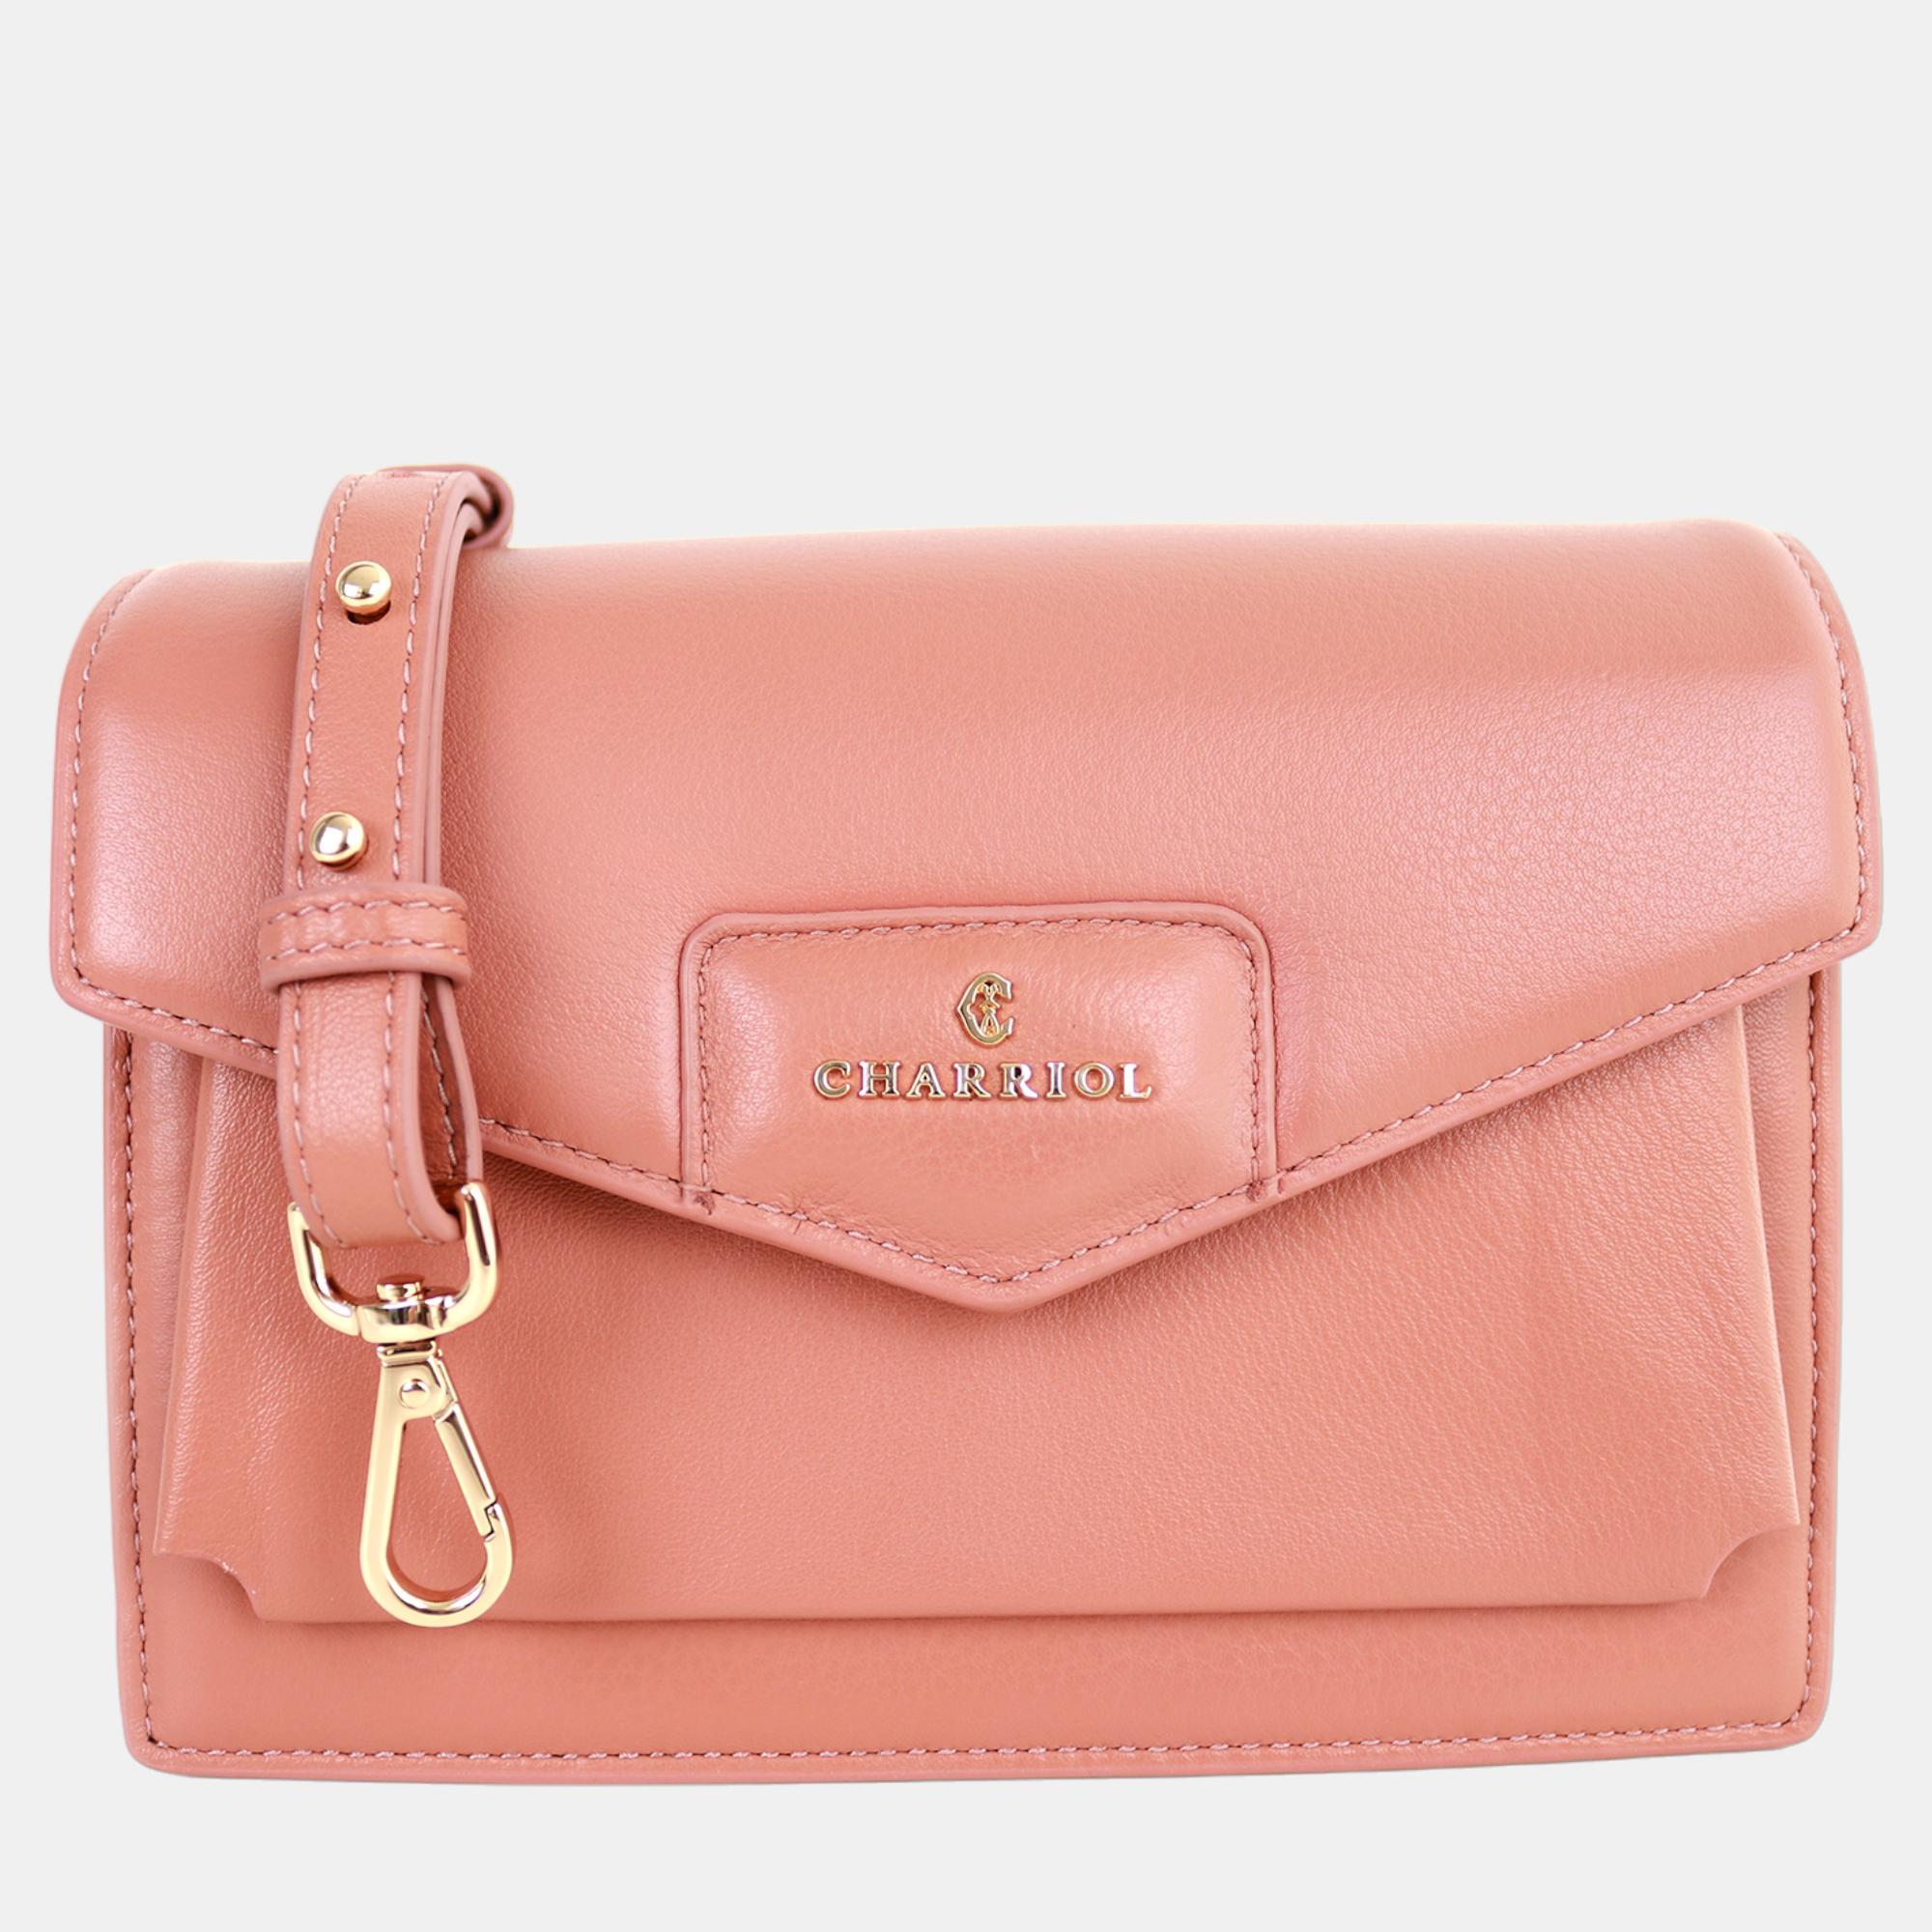 Charriol light brown leather twilight handbag